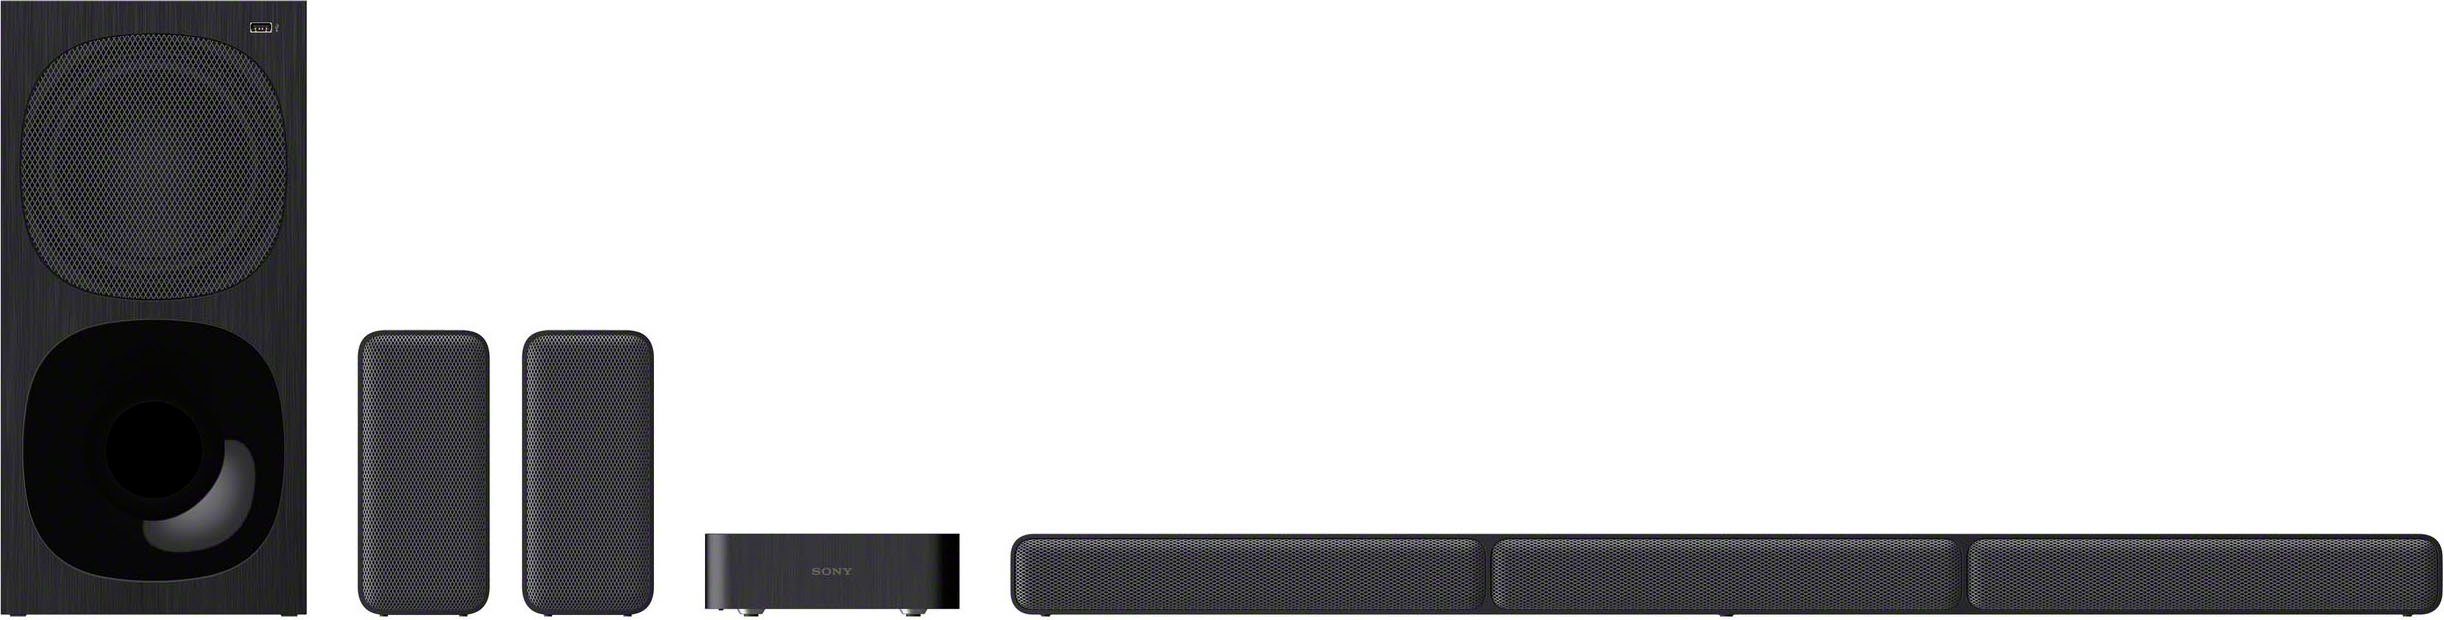 HT-S40R Kanal- W, Sony kabelgebundenem Subwoofer, kabellosen 5.1 600 inkl. Rear-Lautsprechern) Soundbar (Bluetooth,